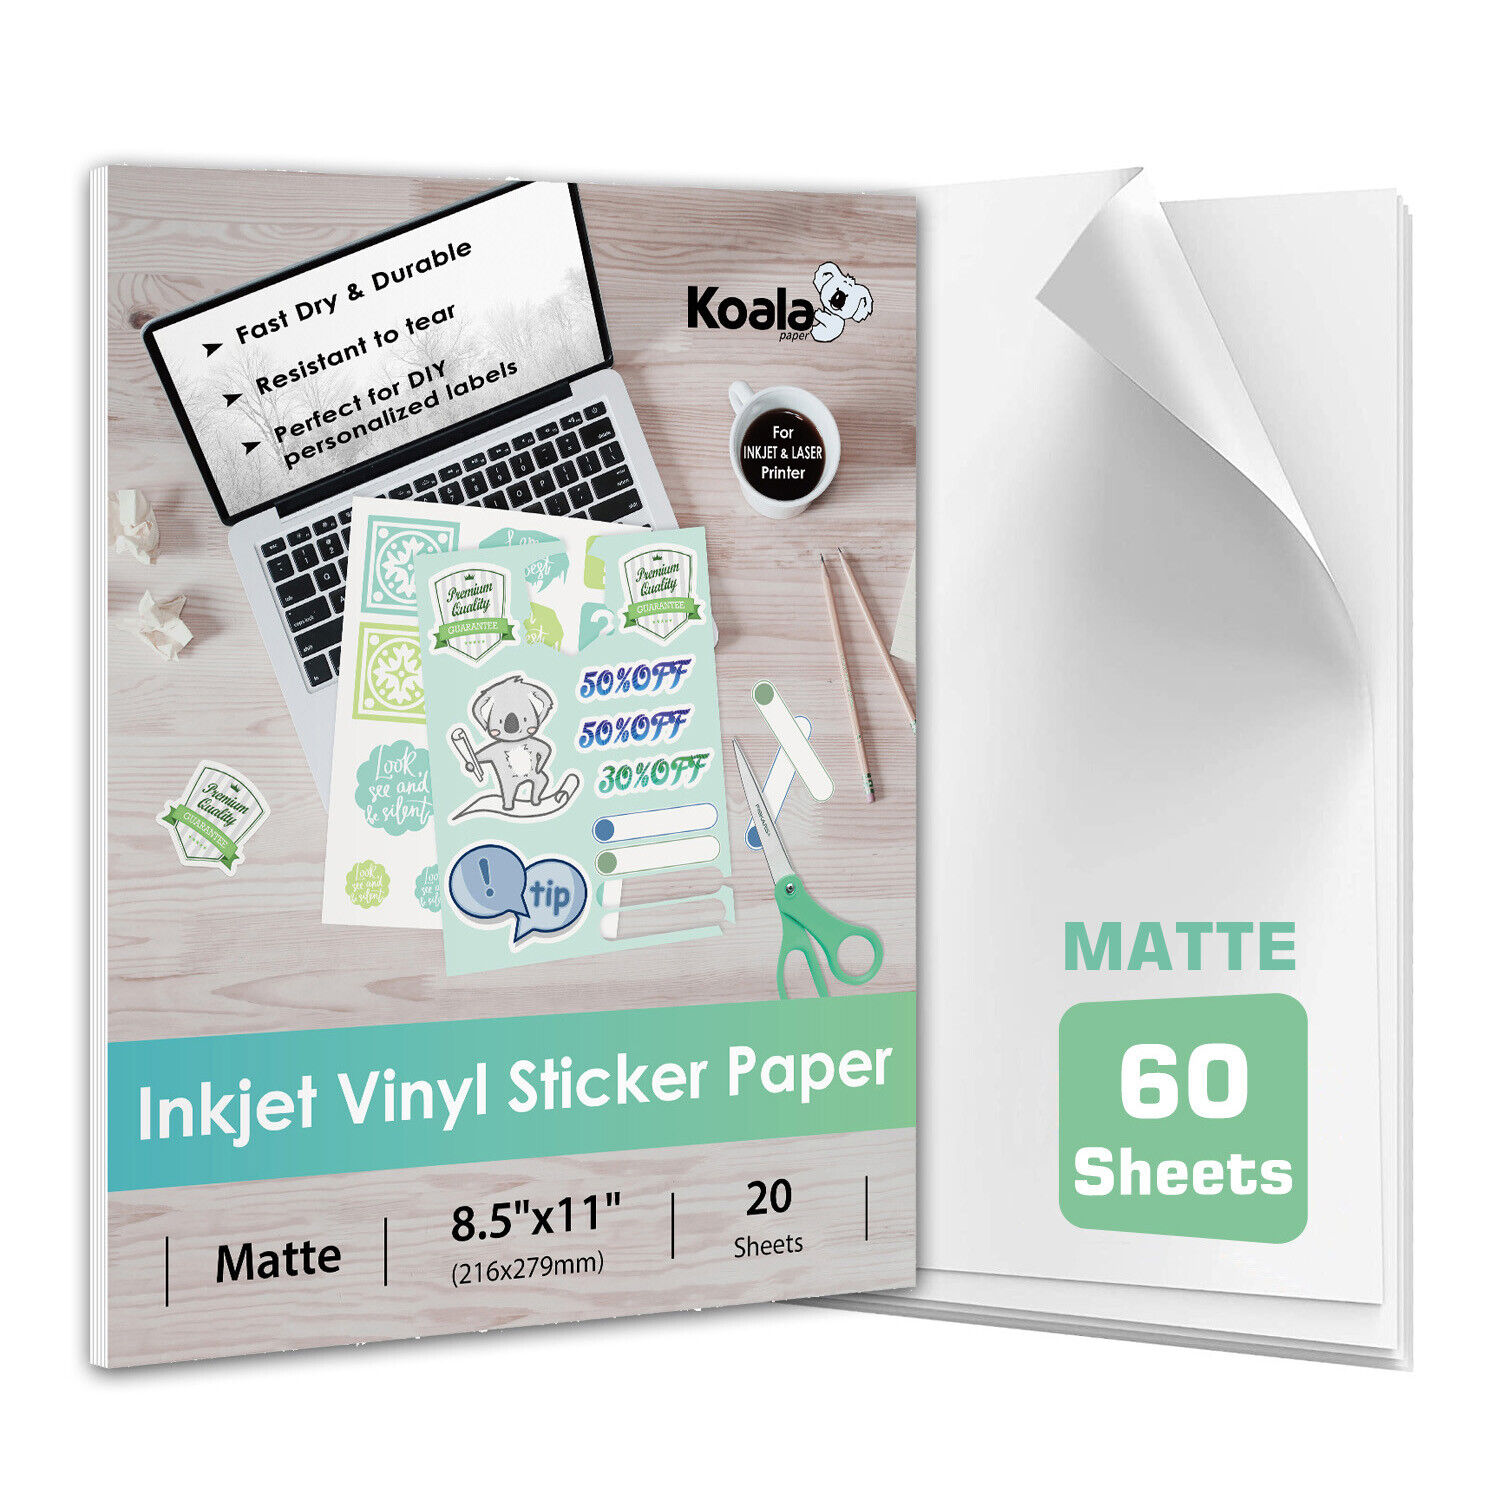 60 Koala Printable Vinyl Sticker Paper Waterproof Matte White Inkjet + Laser 8.5